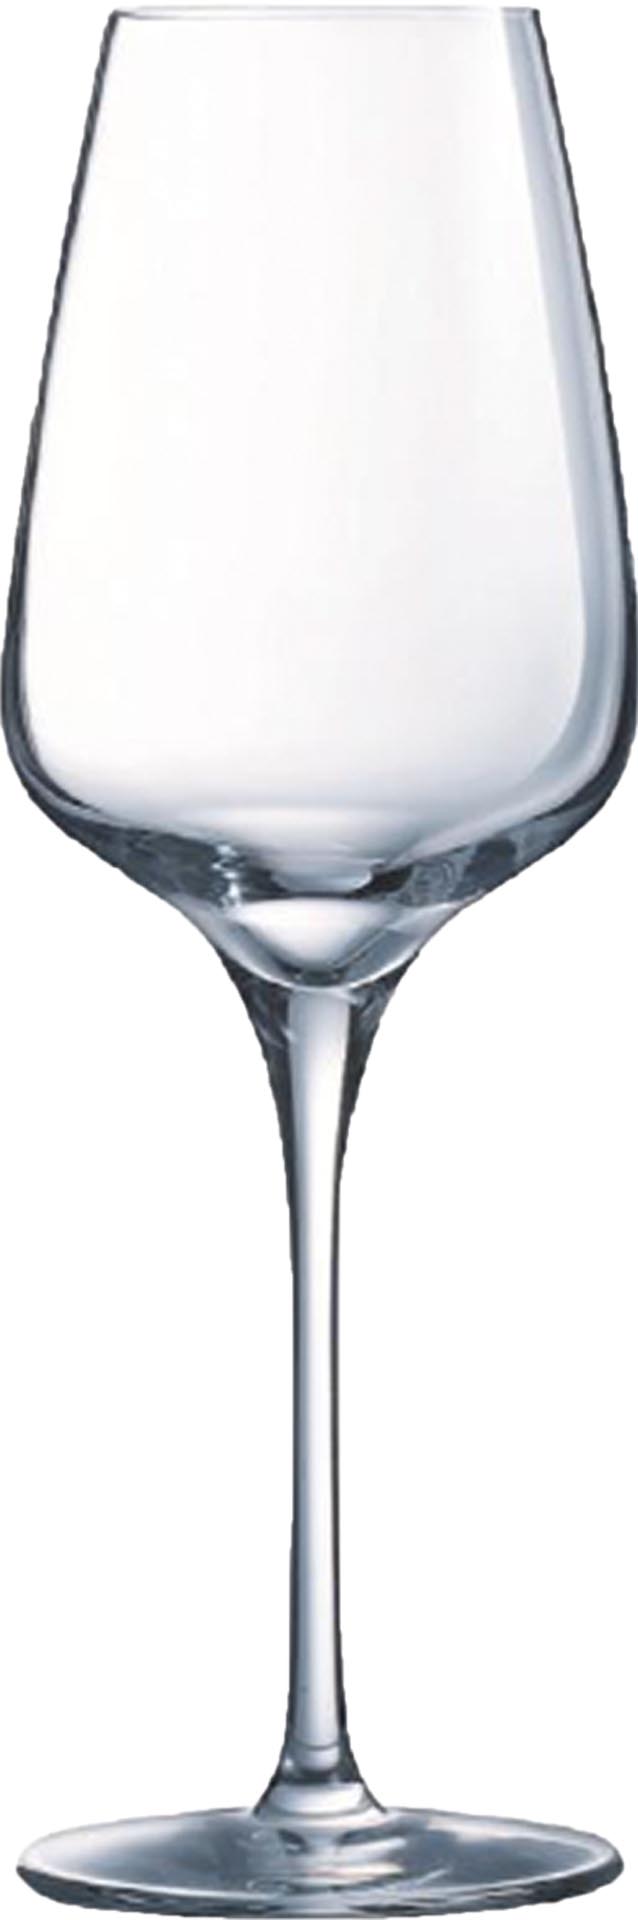 Glasserie "Sublym" Weinglas 35cl /-/ S.104